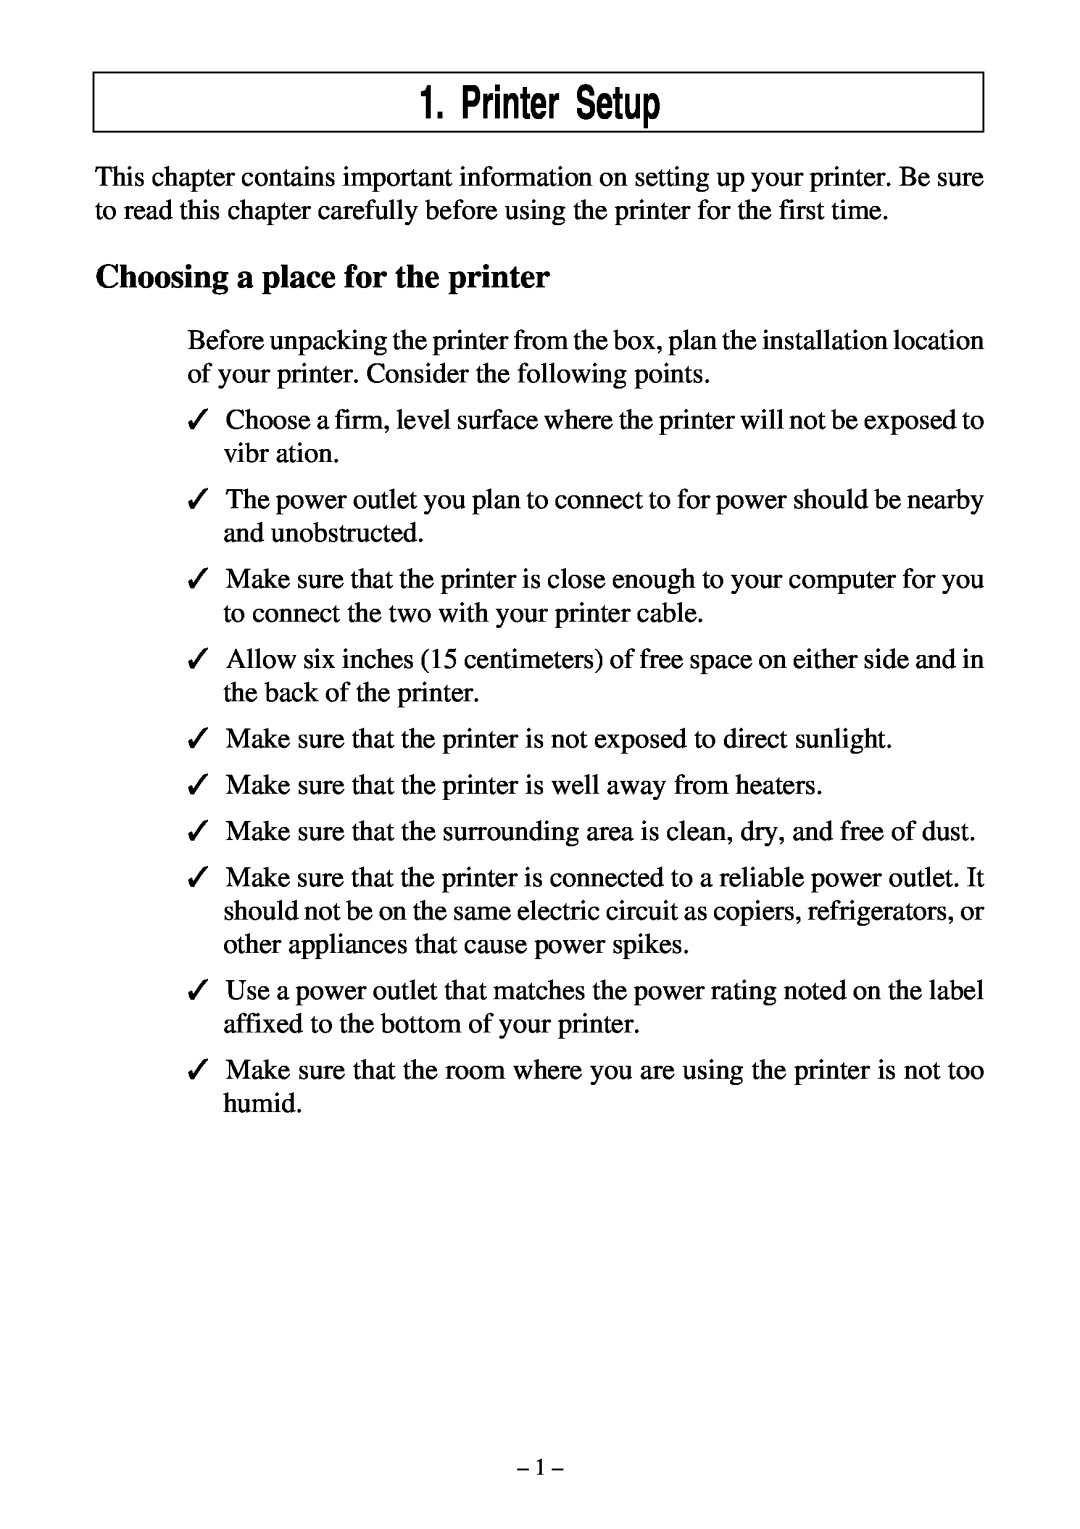 Star Micronics LC-500 user manual Printer Setup, Choosing a place for the printer 